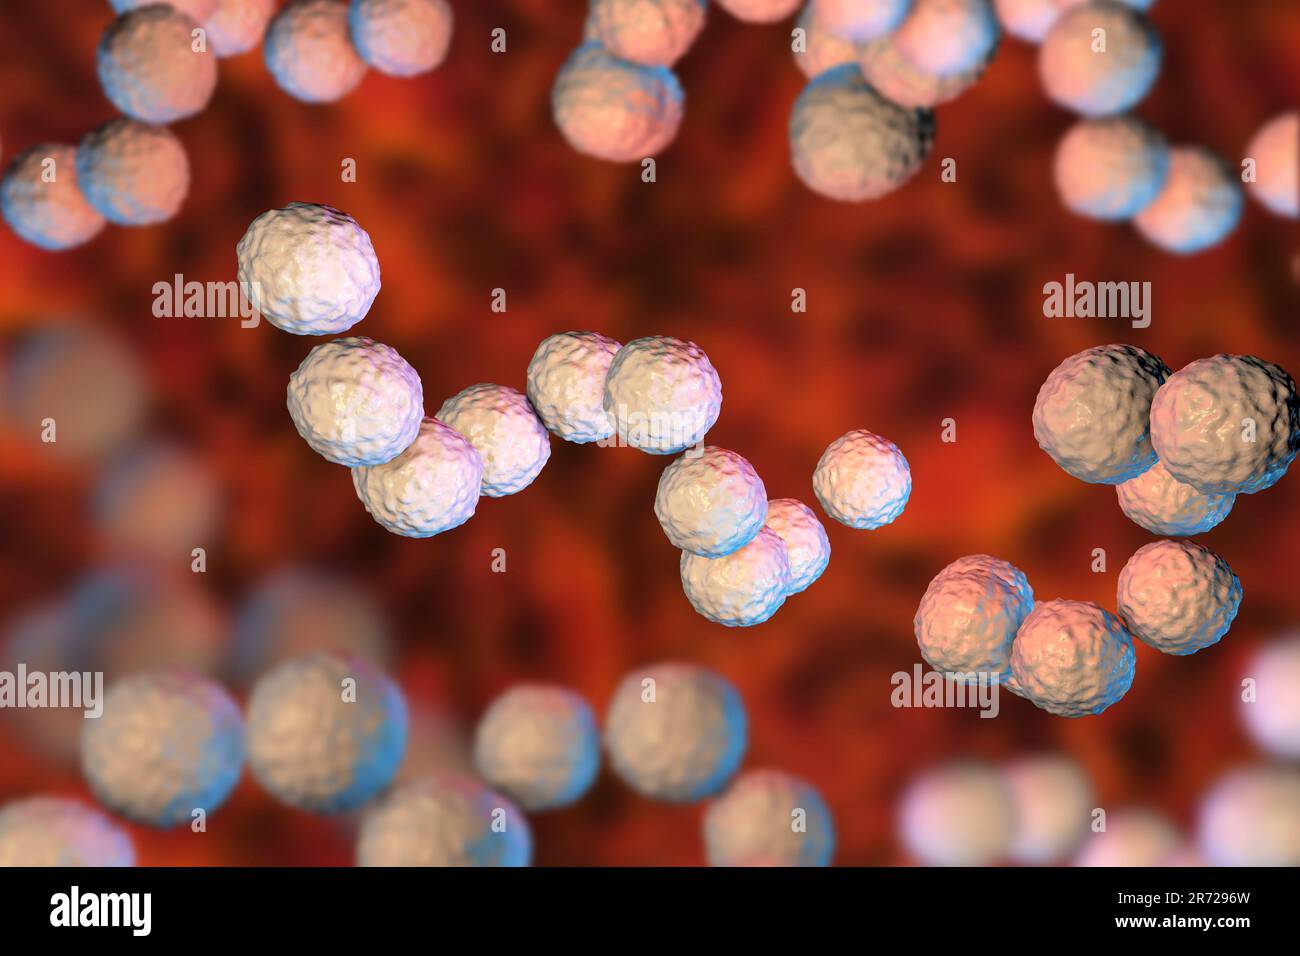 Streptococcus pyogenes bacteria. 3D computer illustration of Streptococcus pyogenes, or group-A Streptococcus, bacteria. S. pyogenes is a gram-positiv Stock Photo